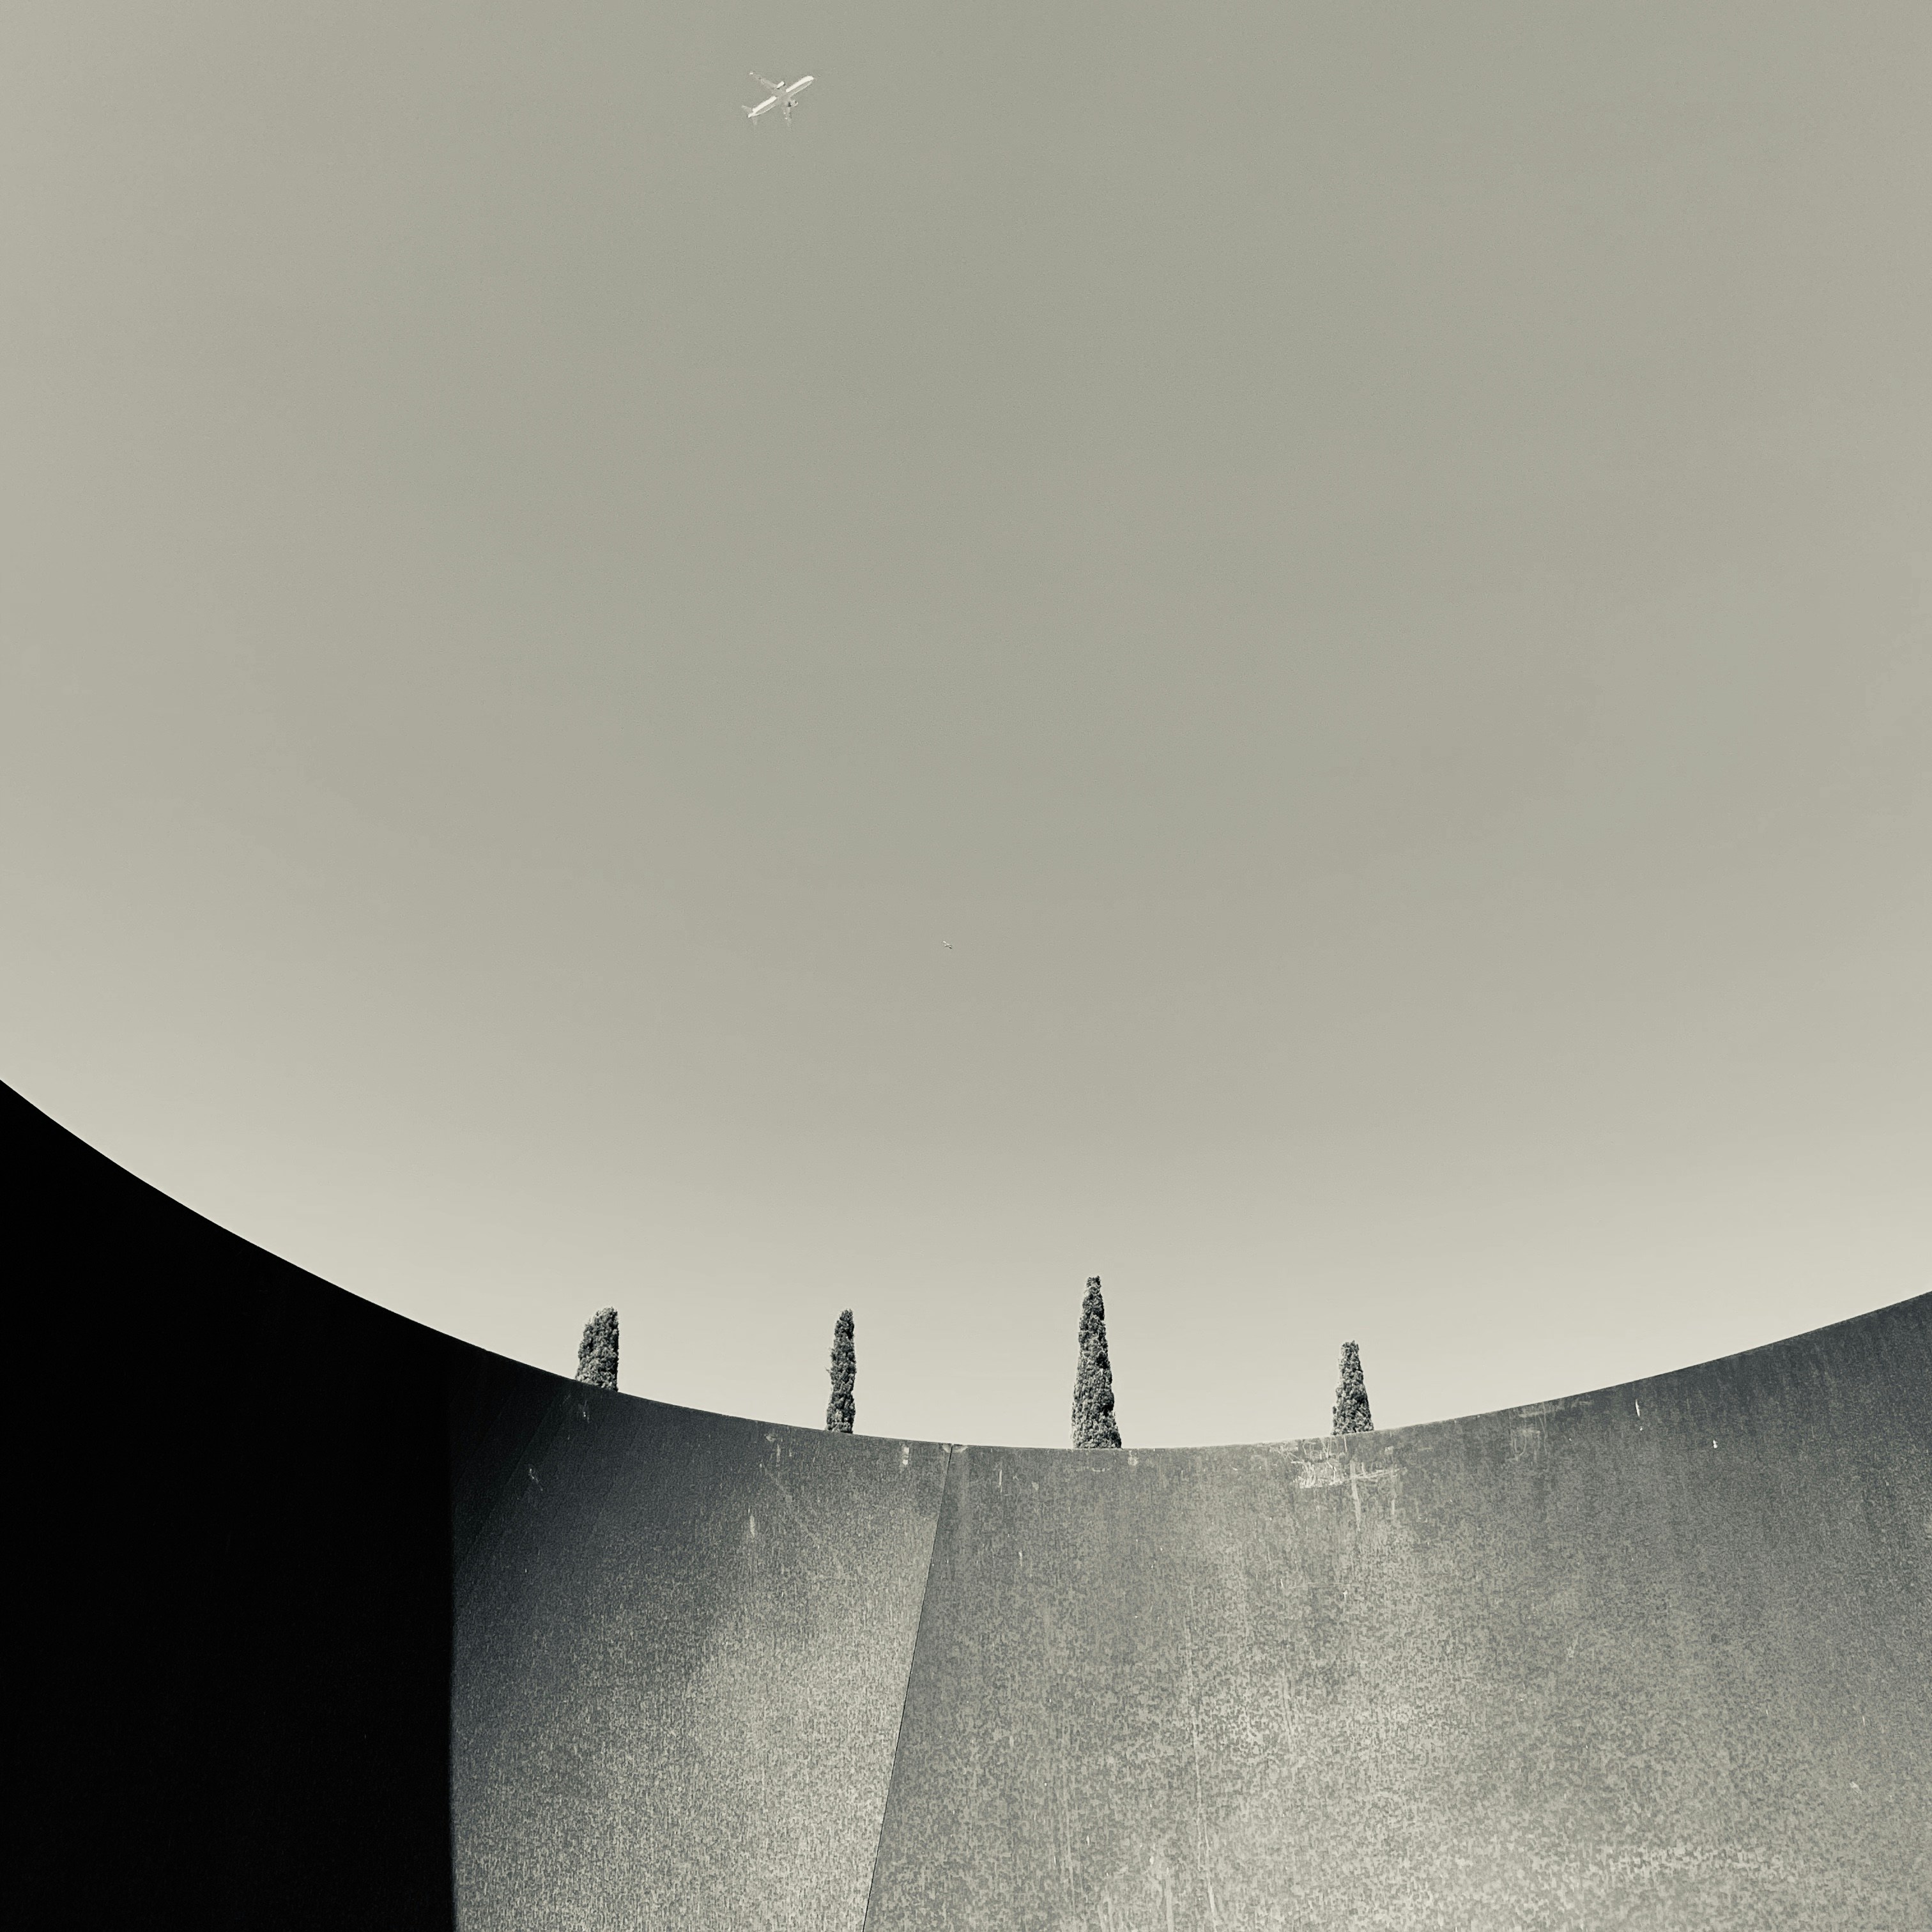 Richard Serra’s Sequence, Stanford University, Palo Alto, CA